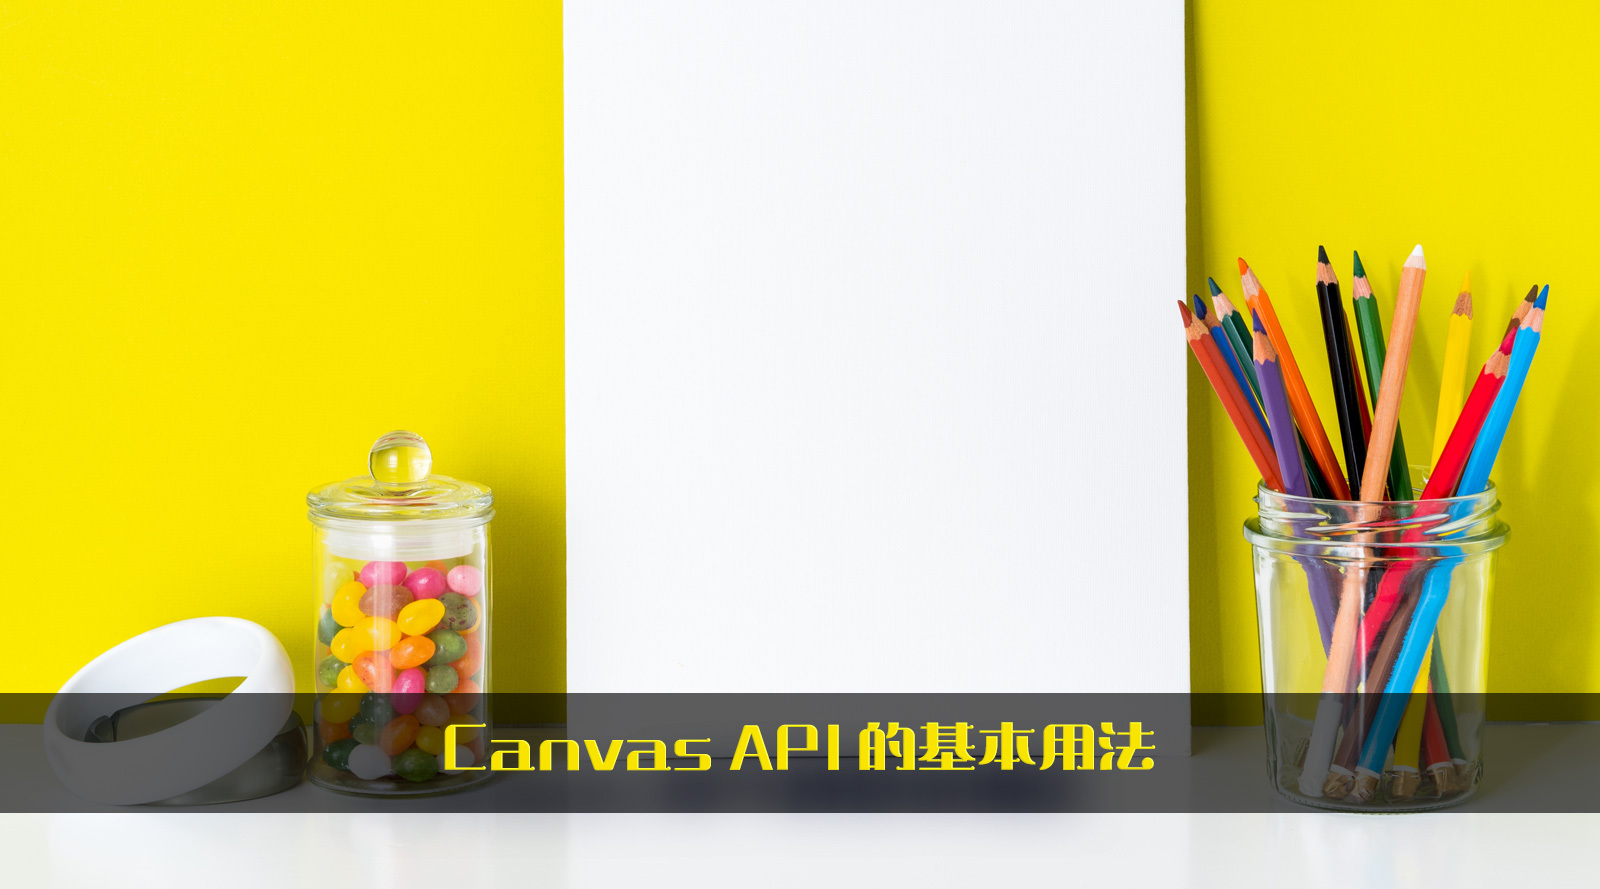 Canvas API 的基本用法